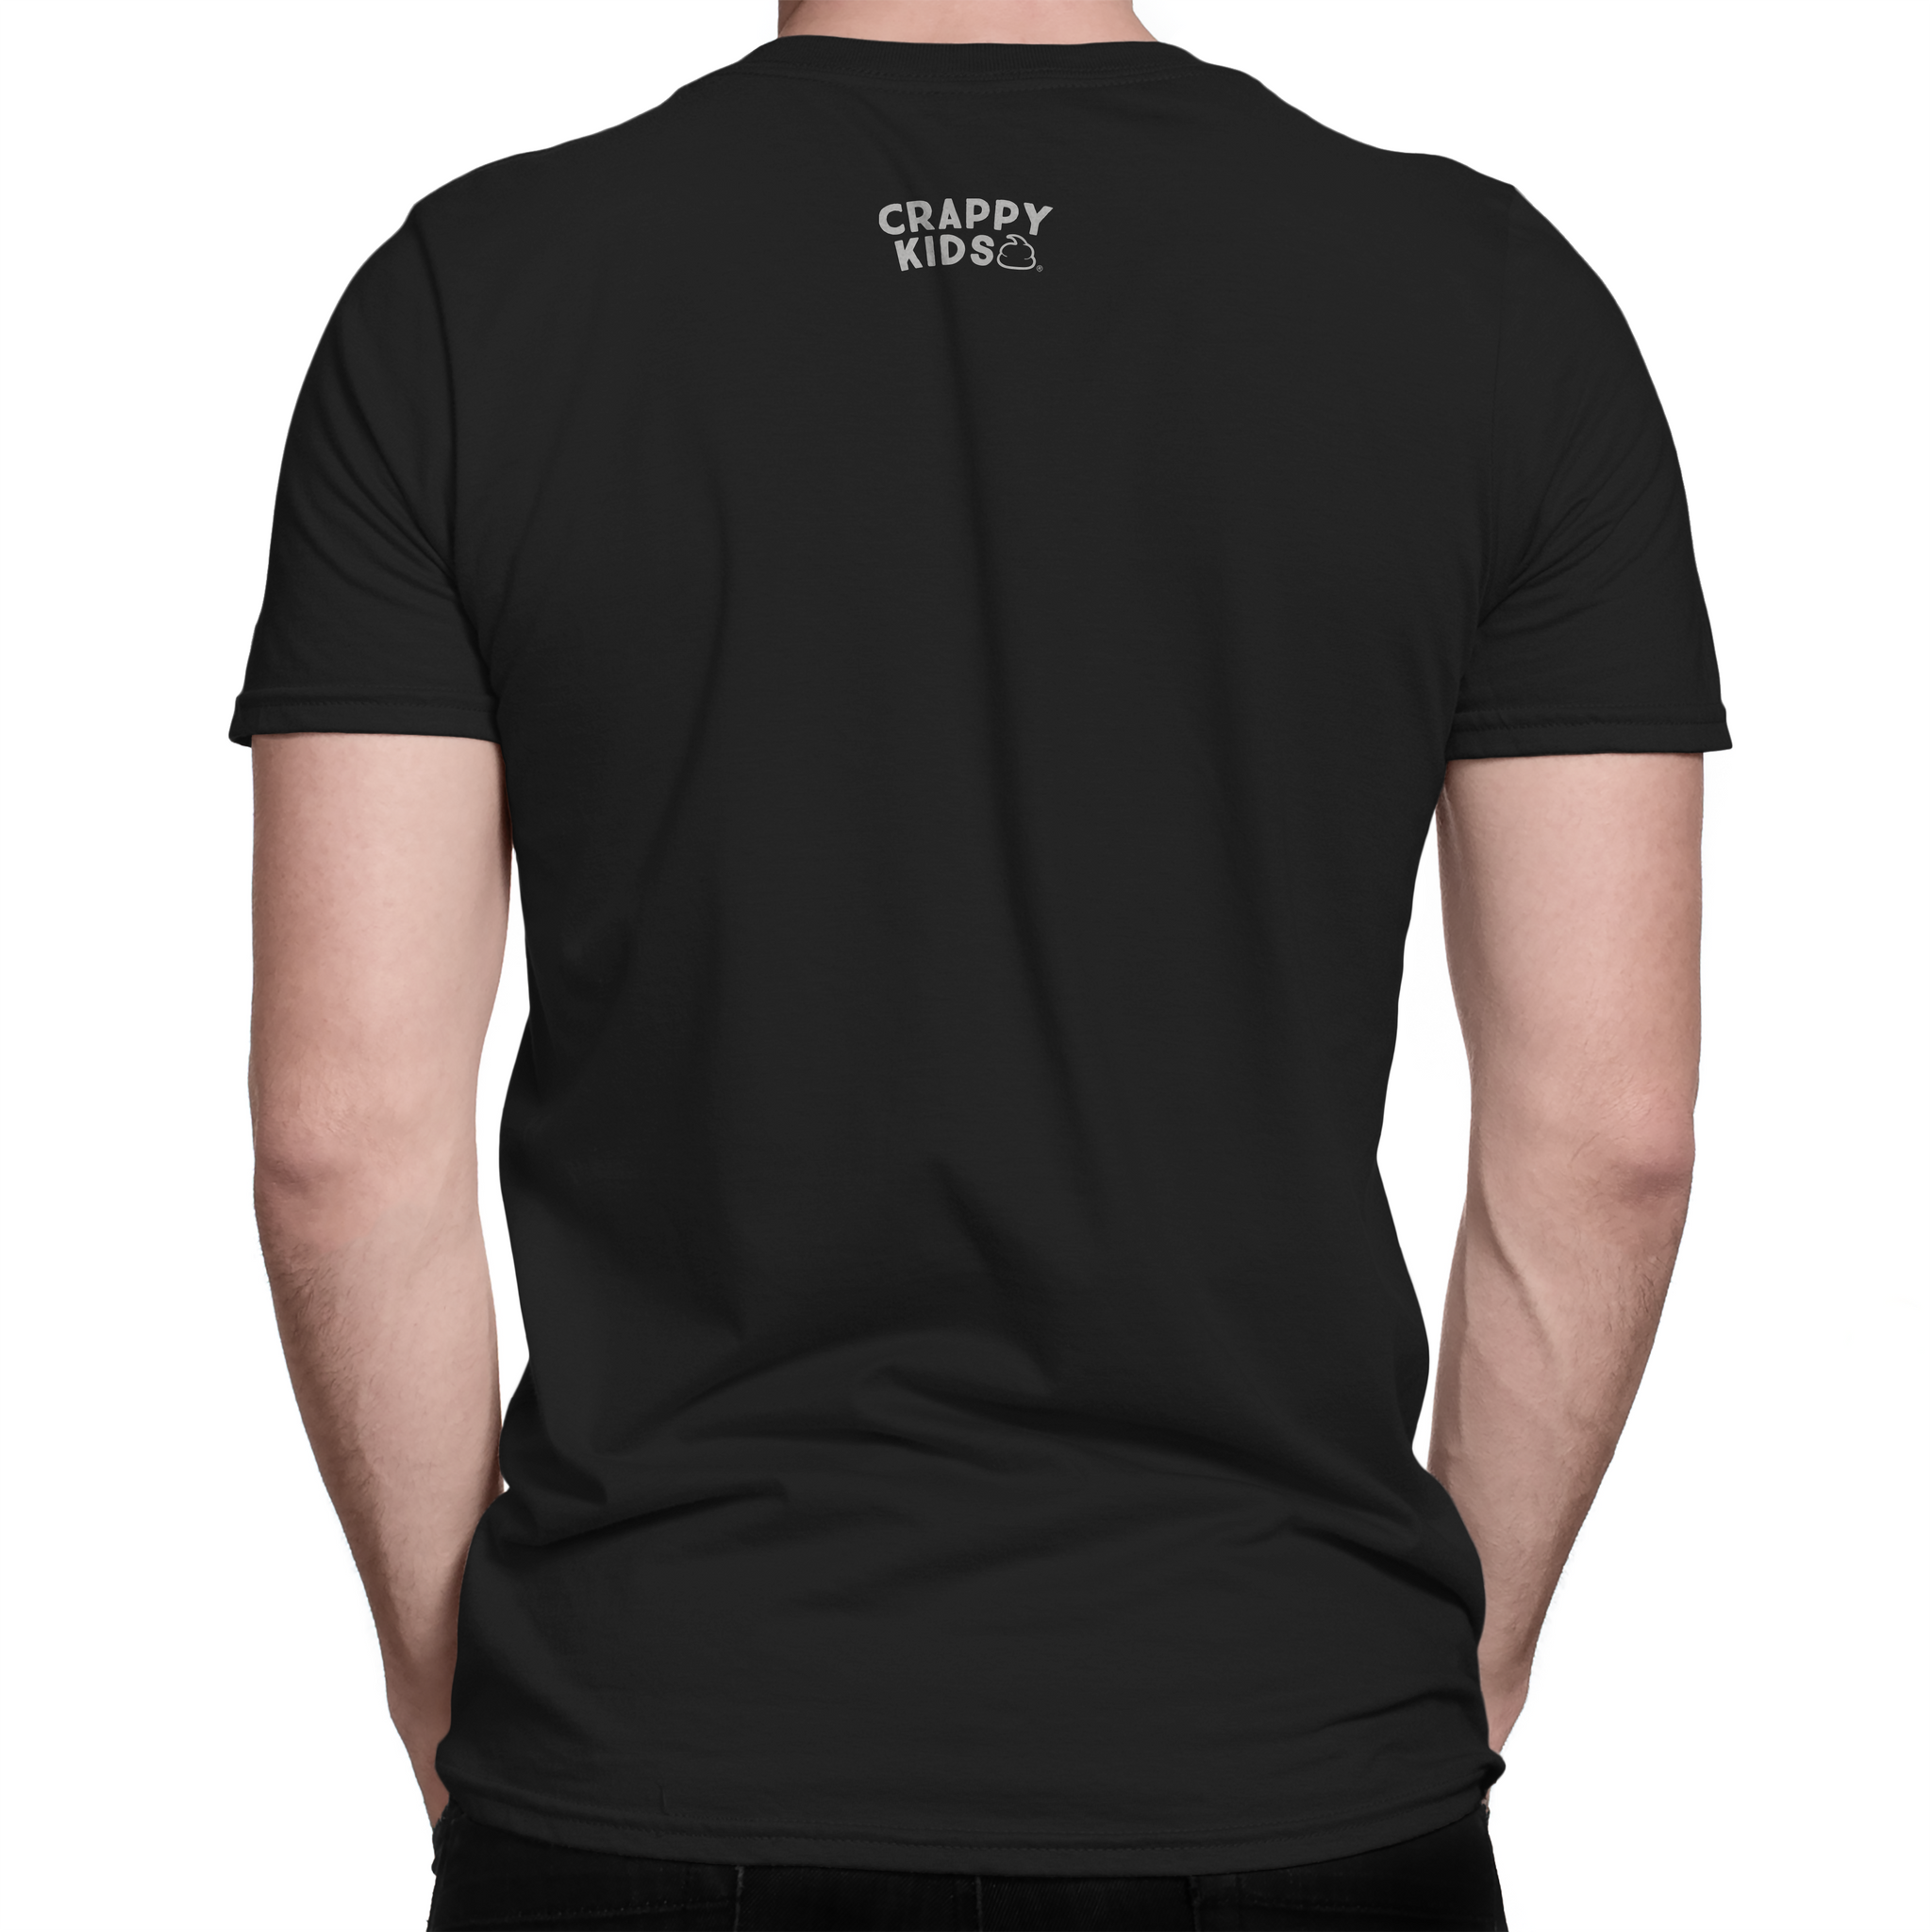 Blink-180 Poo (Black) T-Shirt